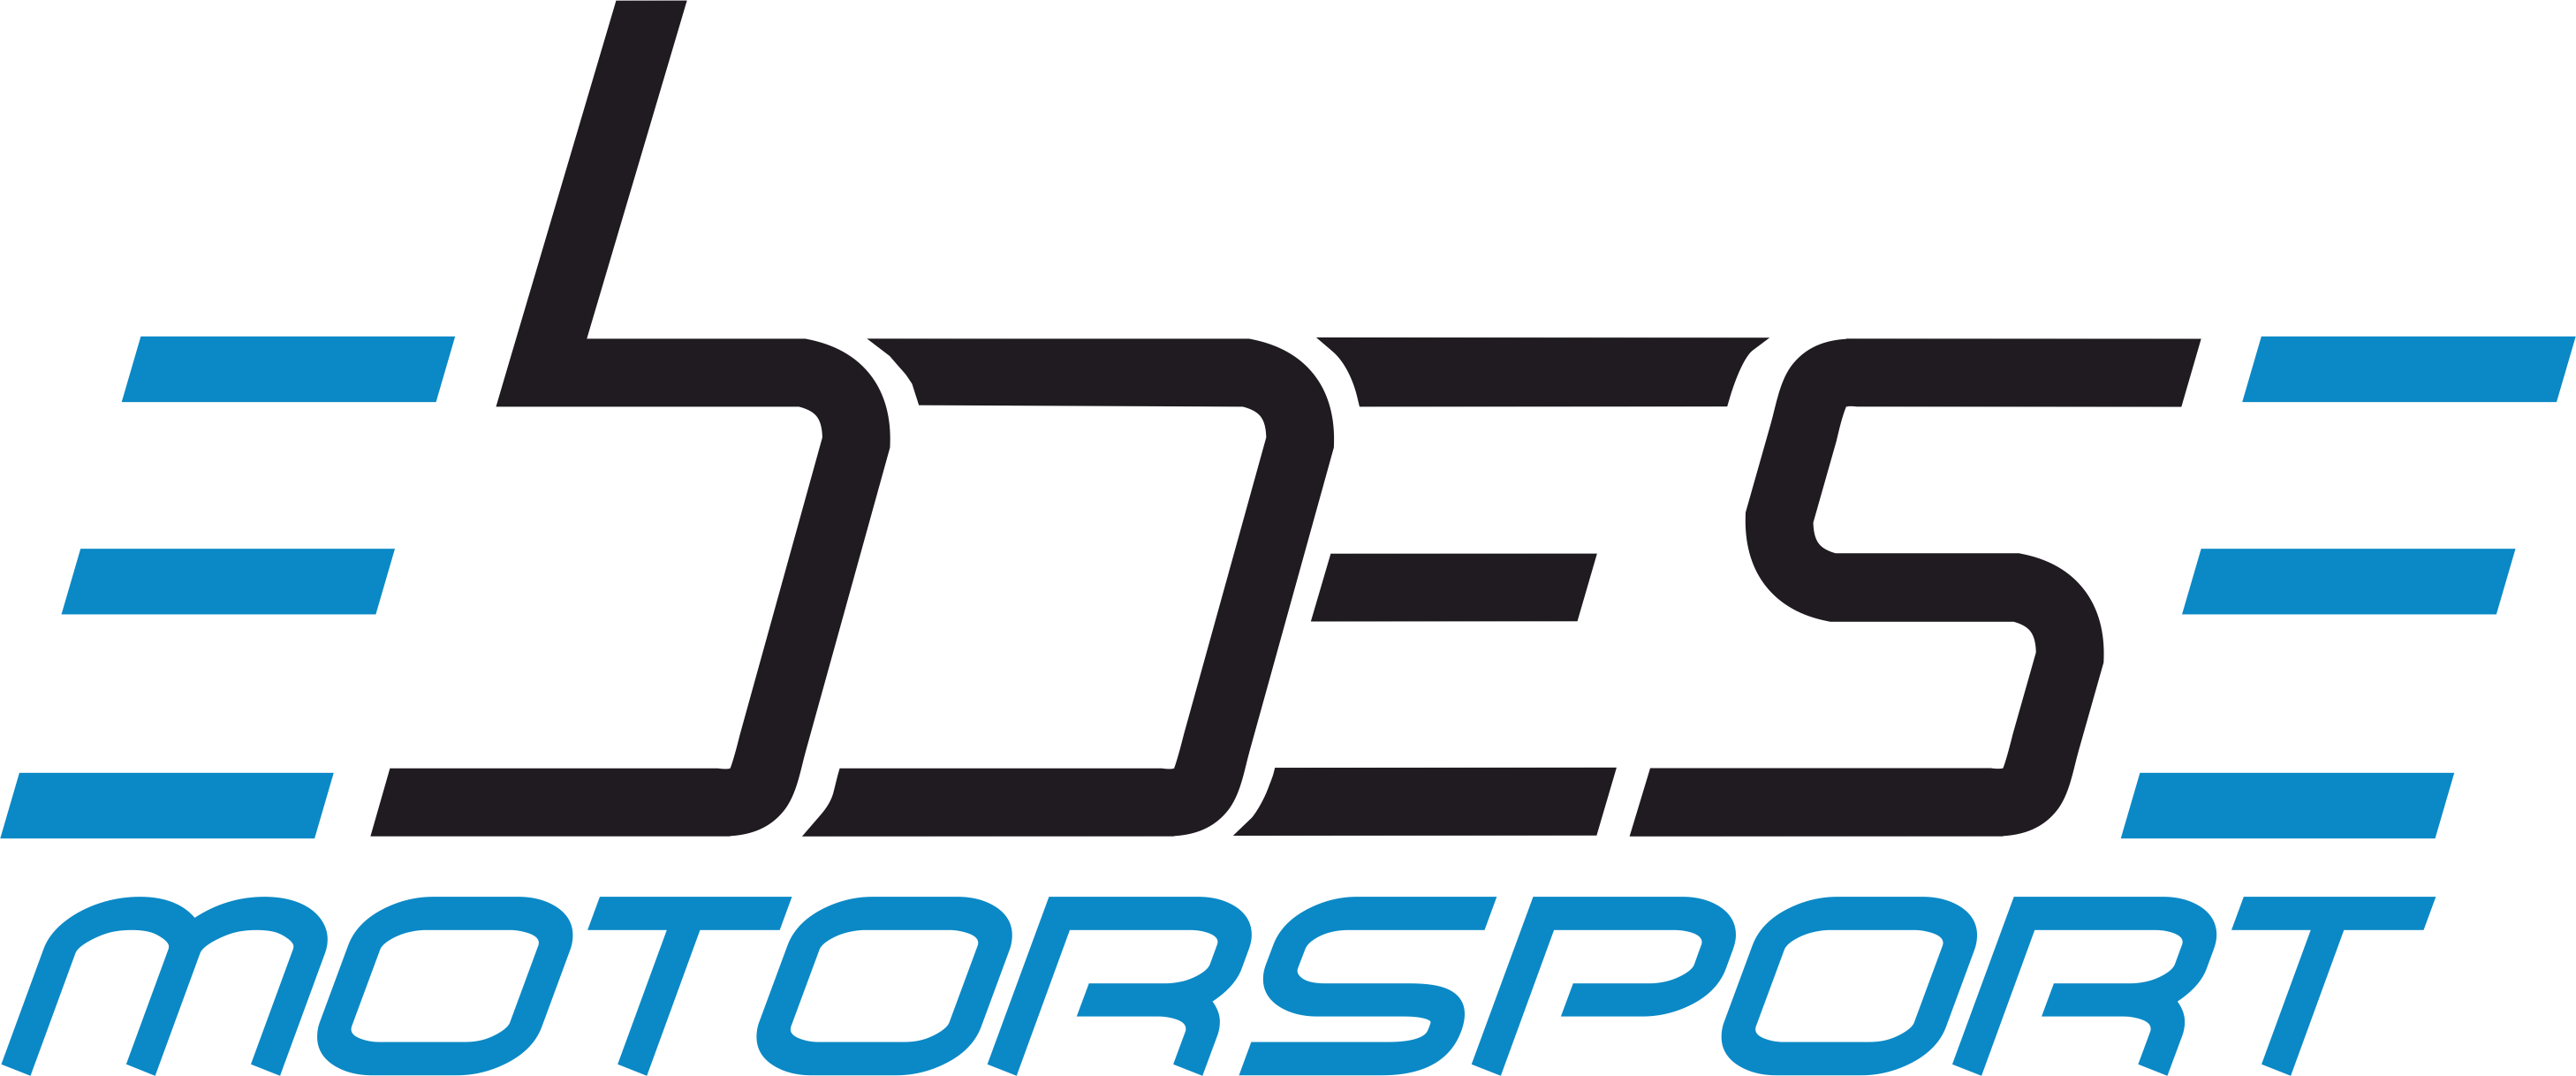 Boes Motorsport